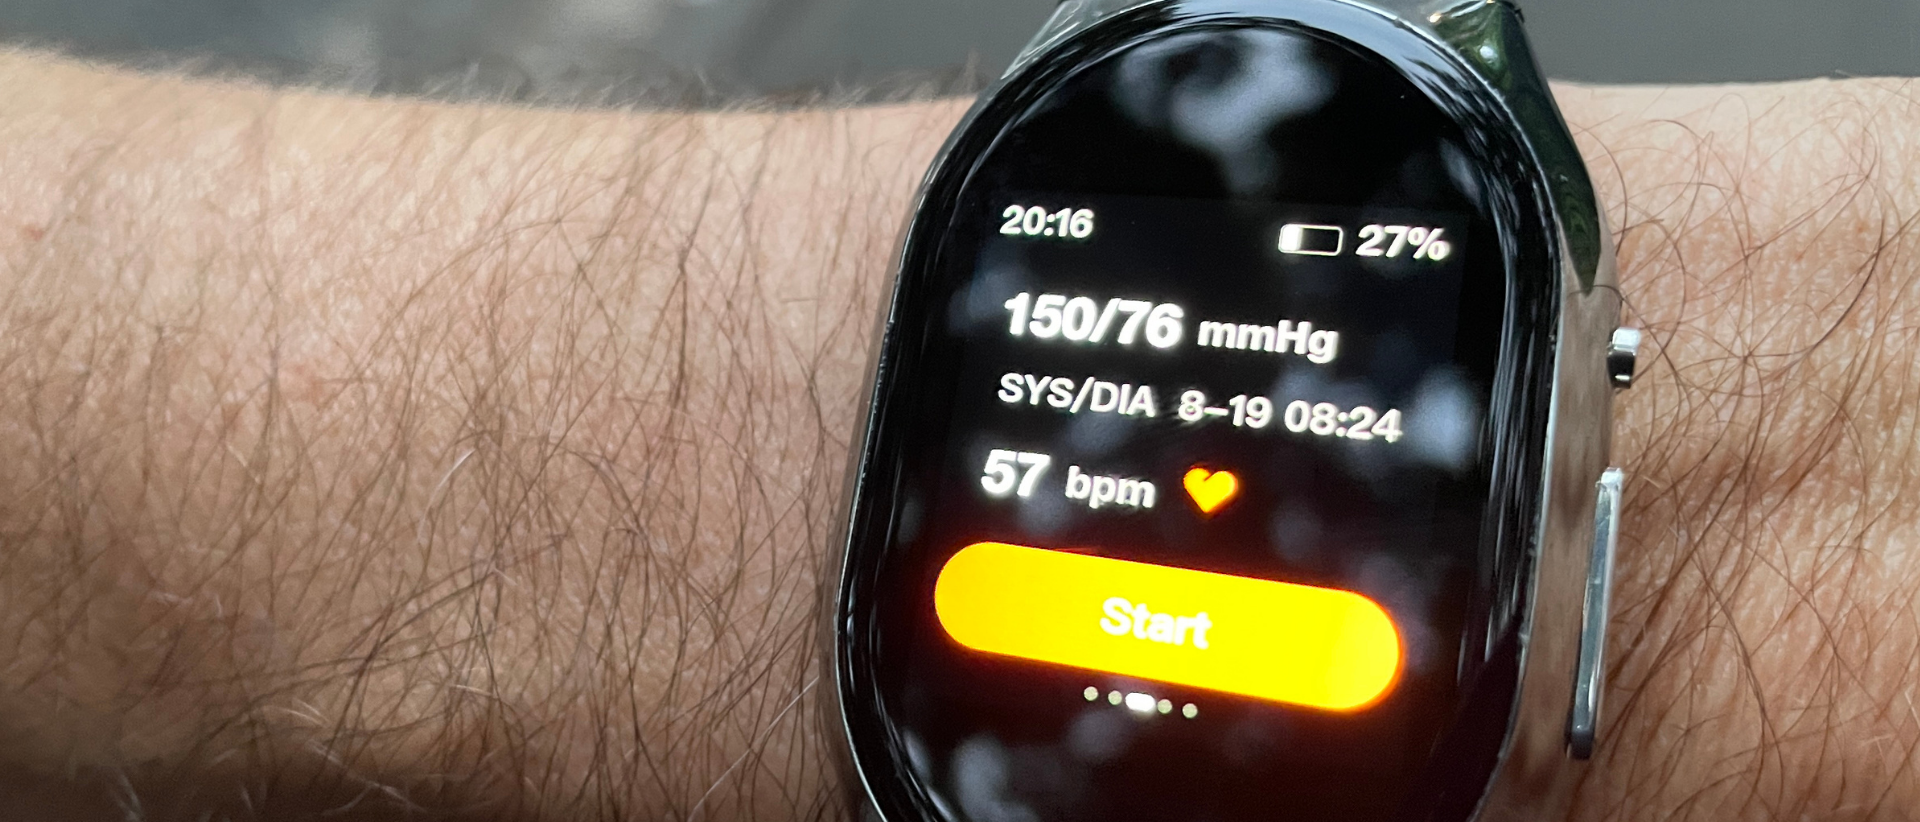 YHE BP Doctor Pro Blood Pressure Smartwatch - App BP Doctor PLUS